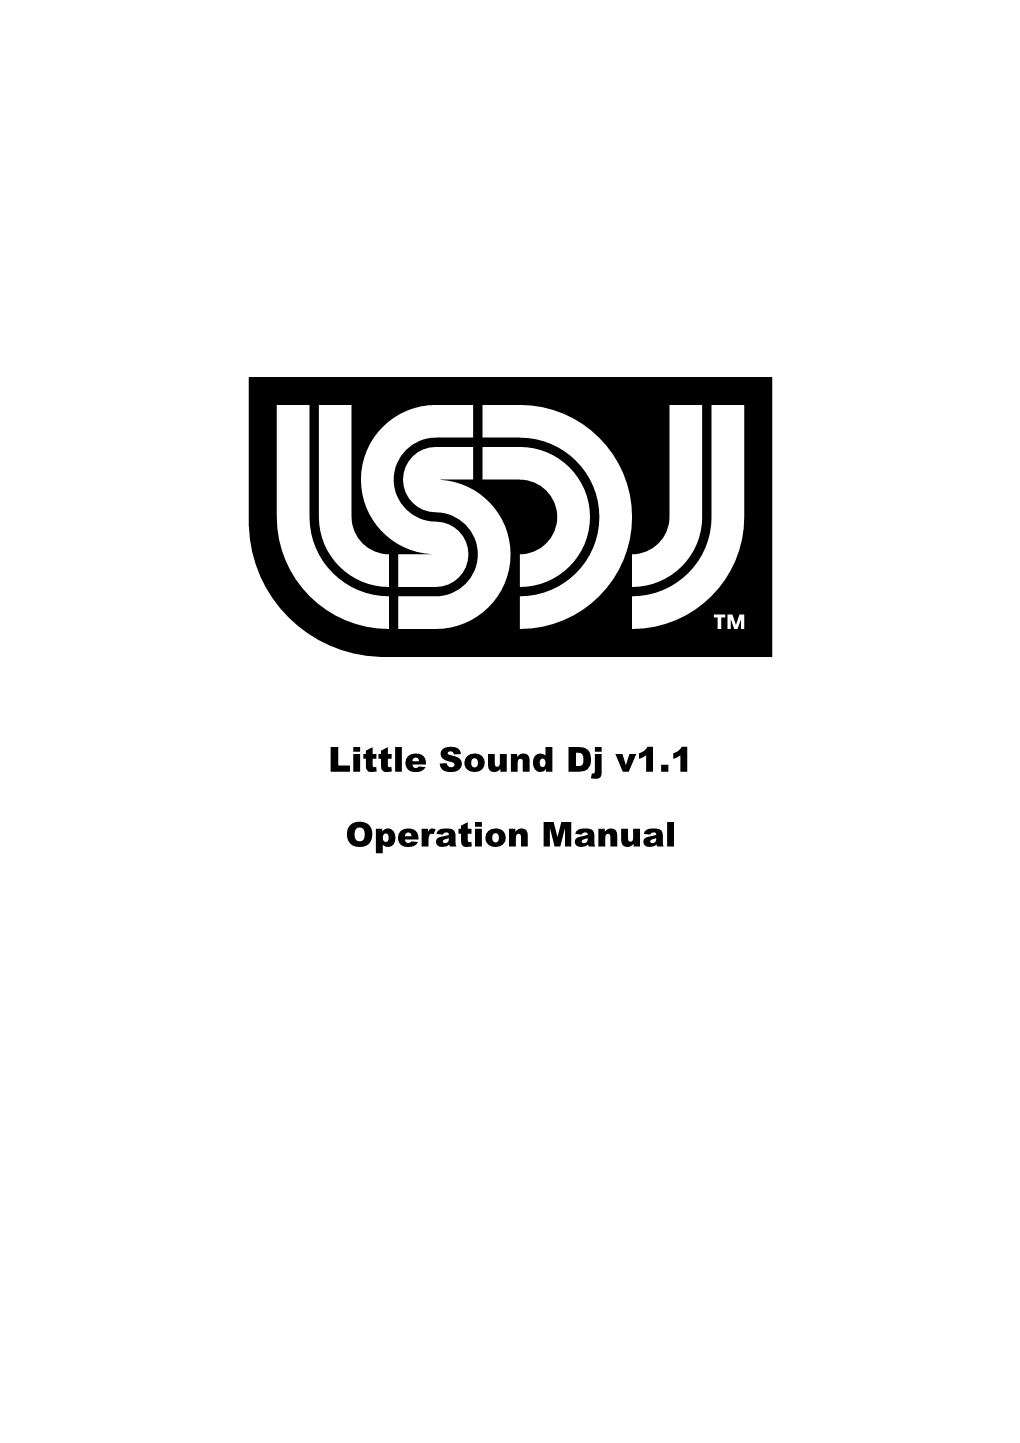 Little Sound Dj V1.1 Operation Manual